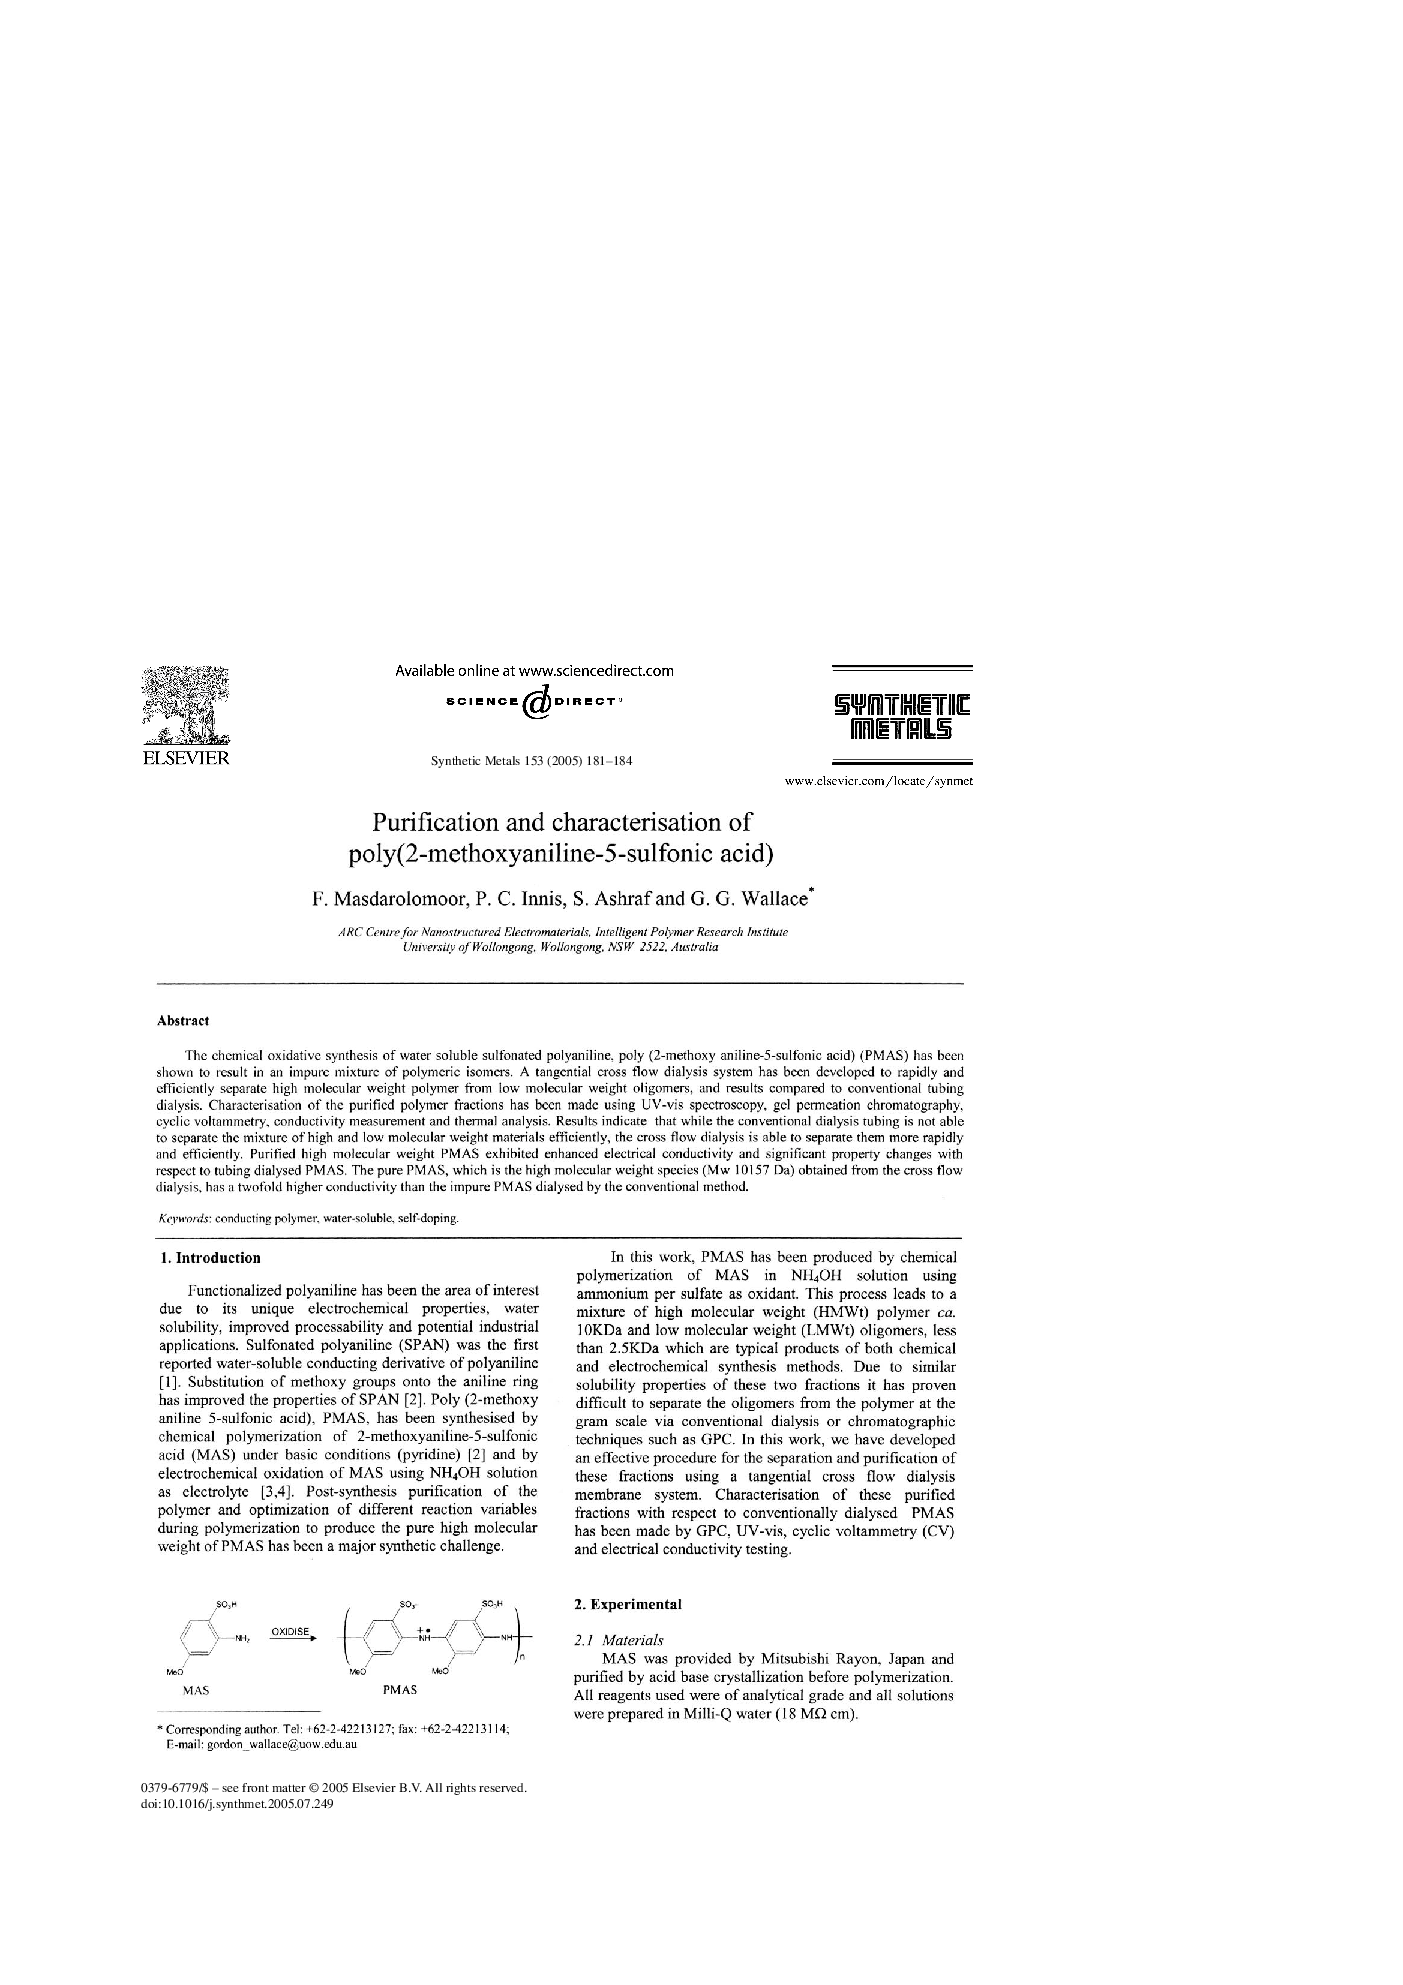 Purification and characterisation of poly(2-methoxyaniline-5-sulfonicacid acid)